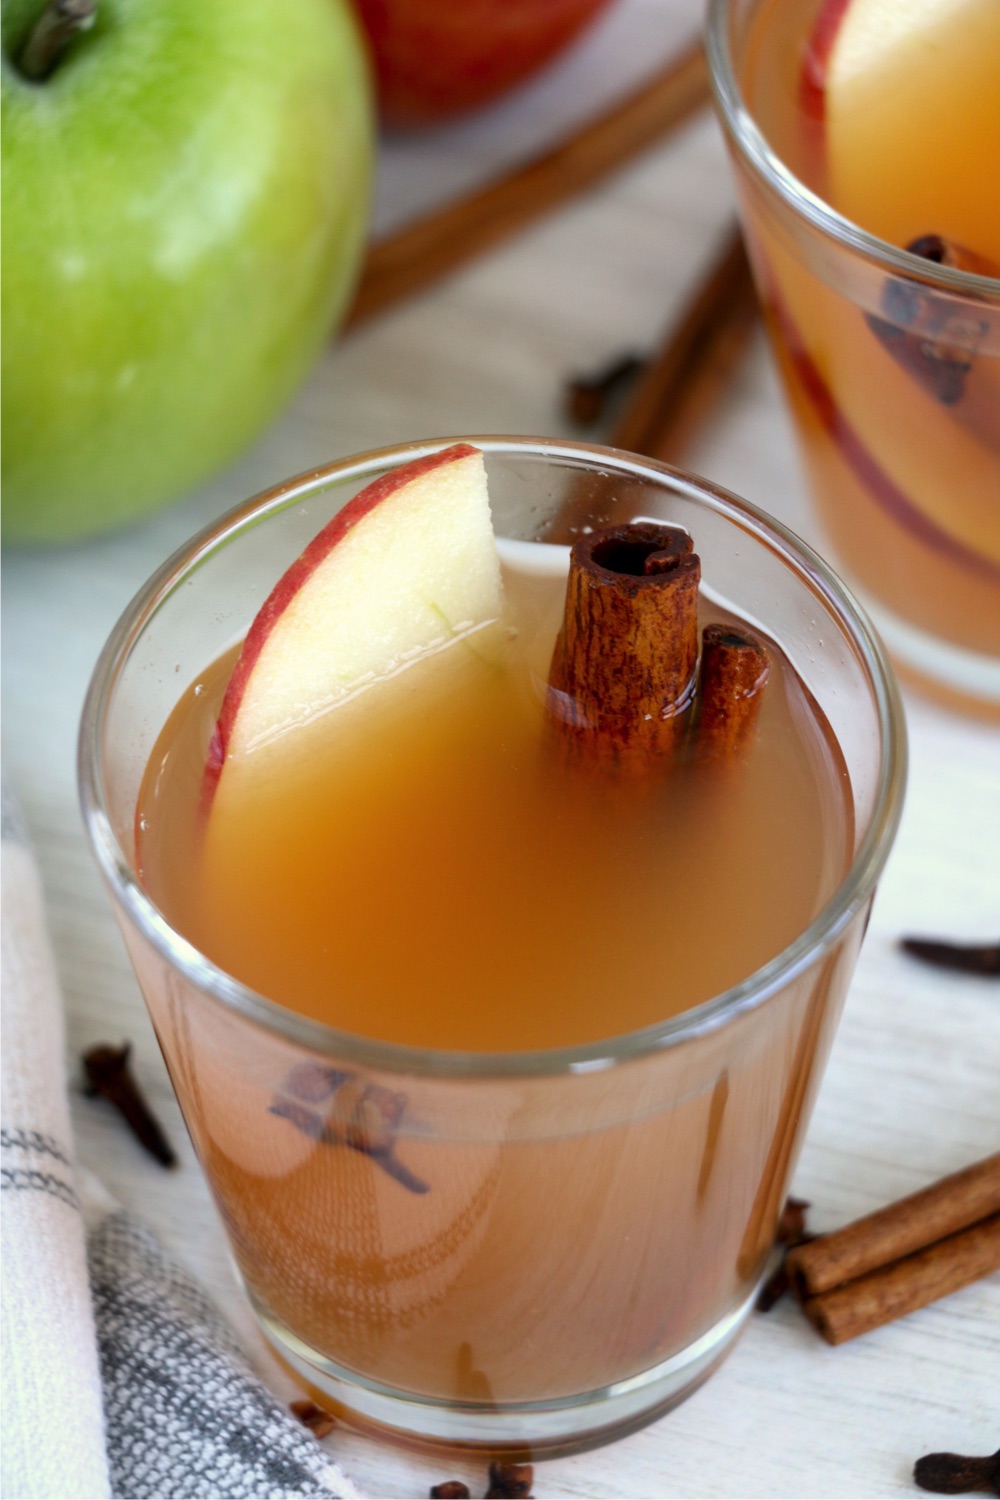 Glass of apple cider with sliced apple and cinnamon sticks